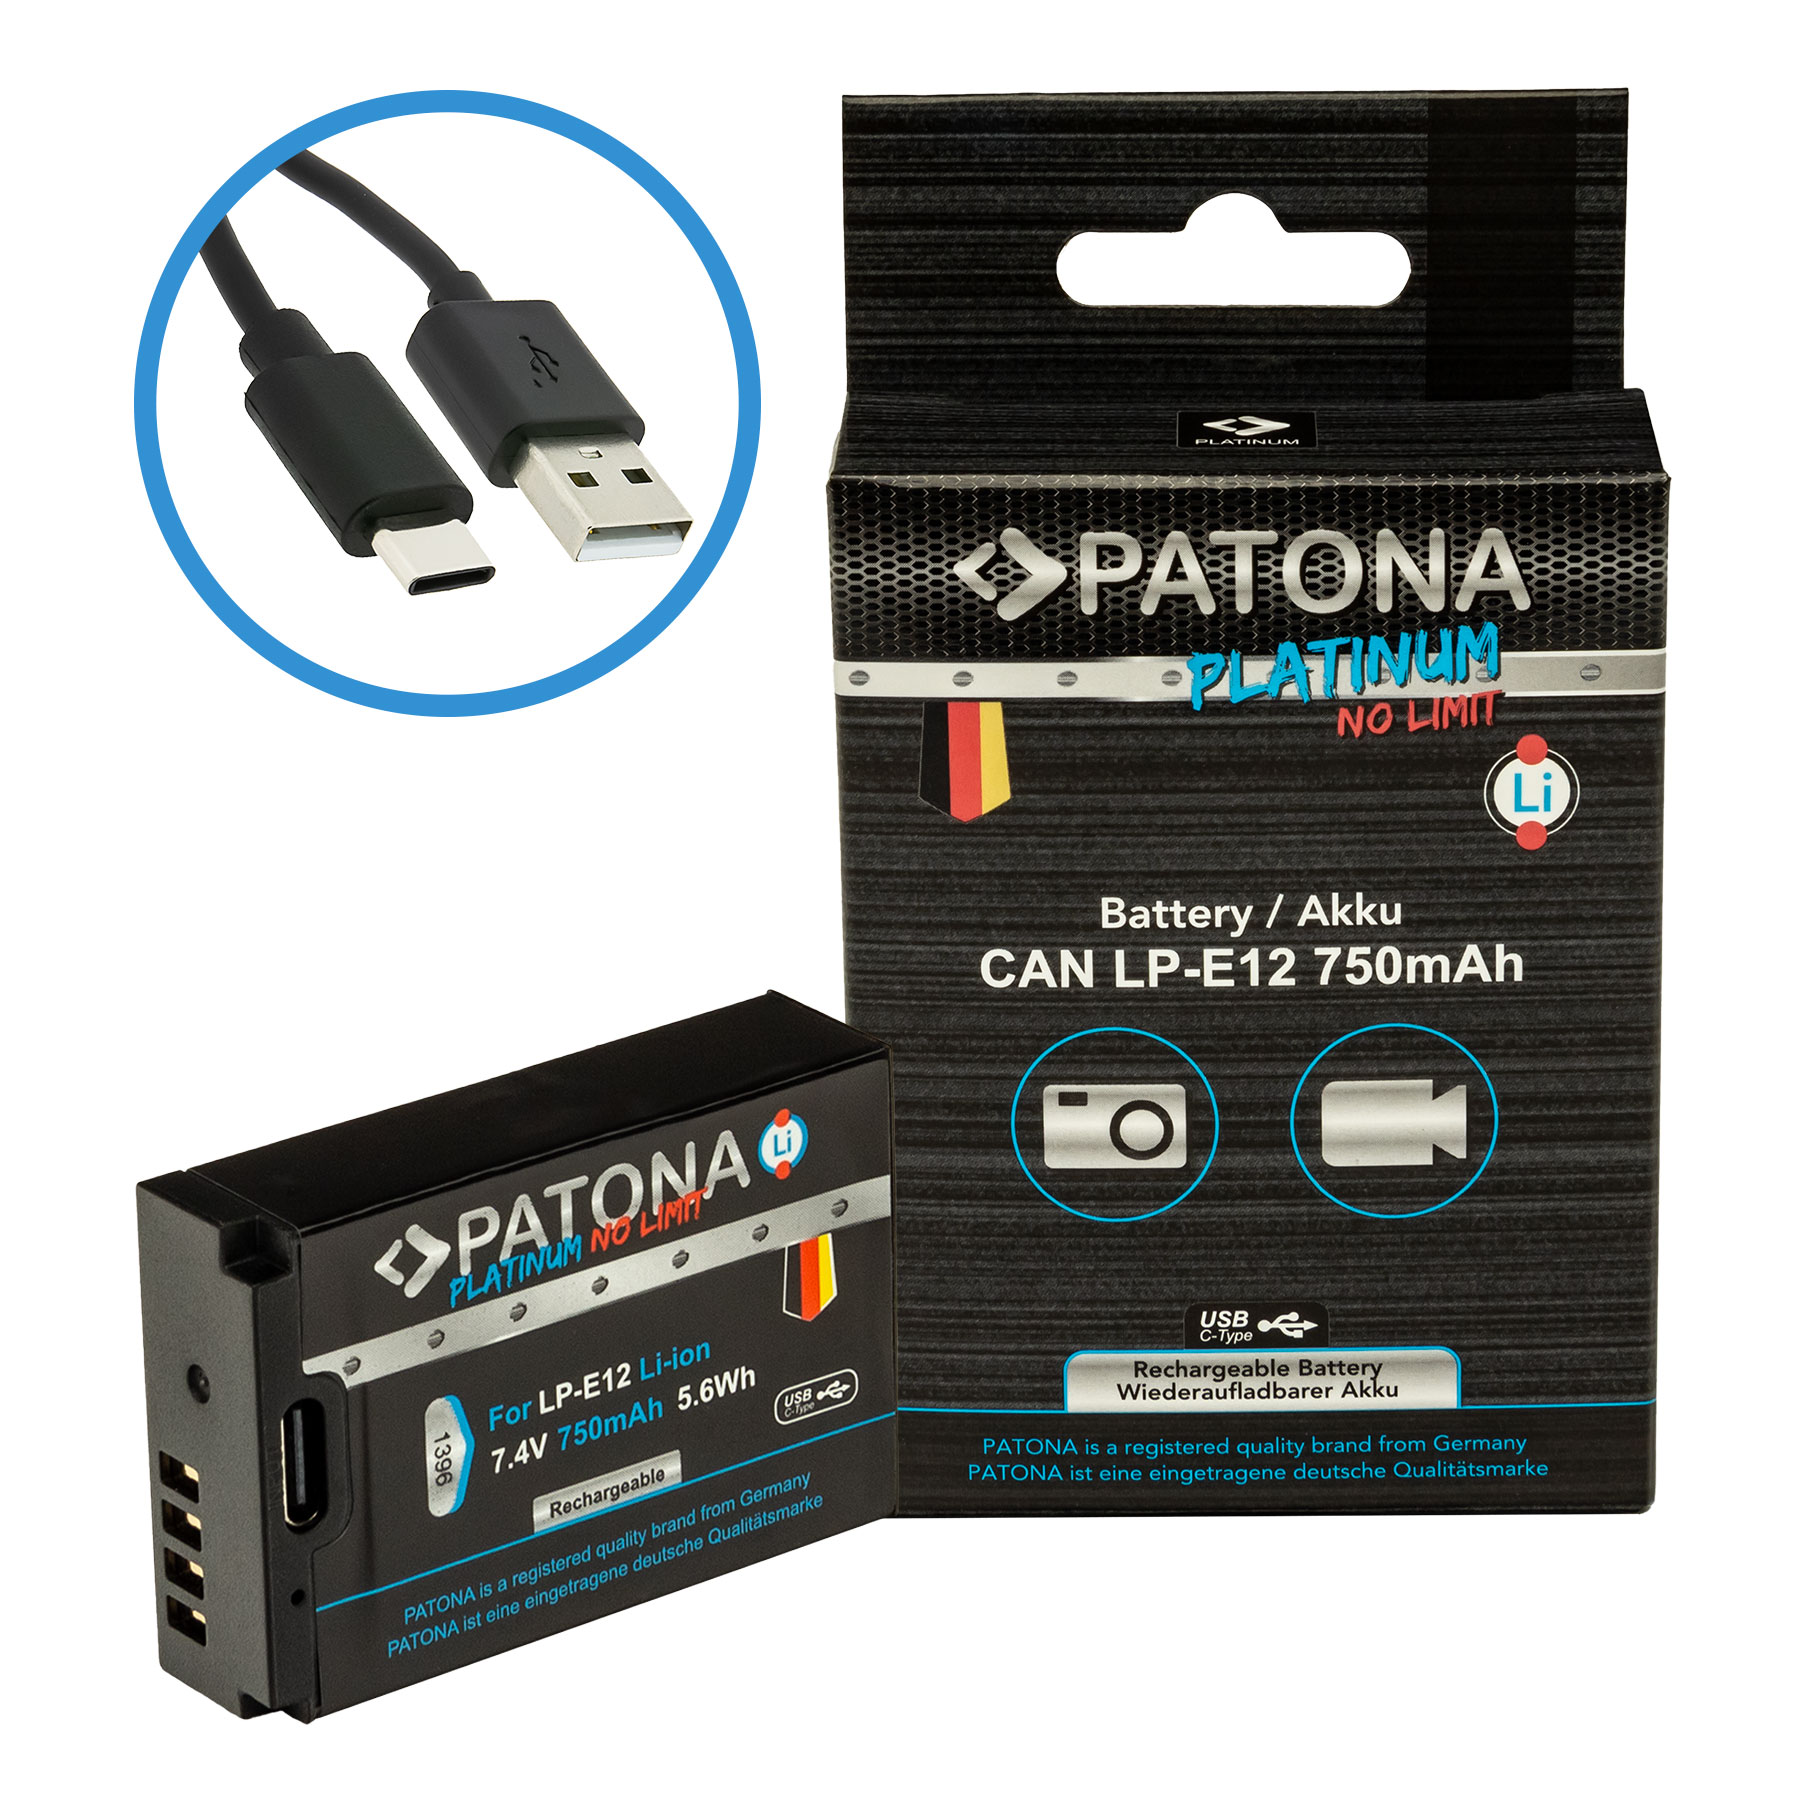 PATONA Platinum battery with USB-C input for Canon LP-E12